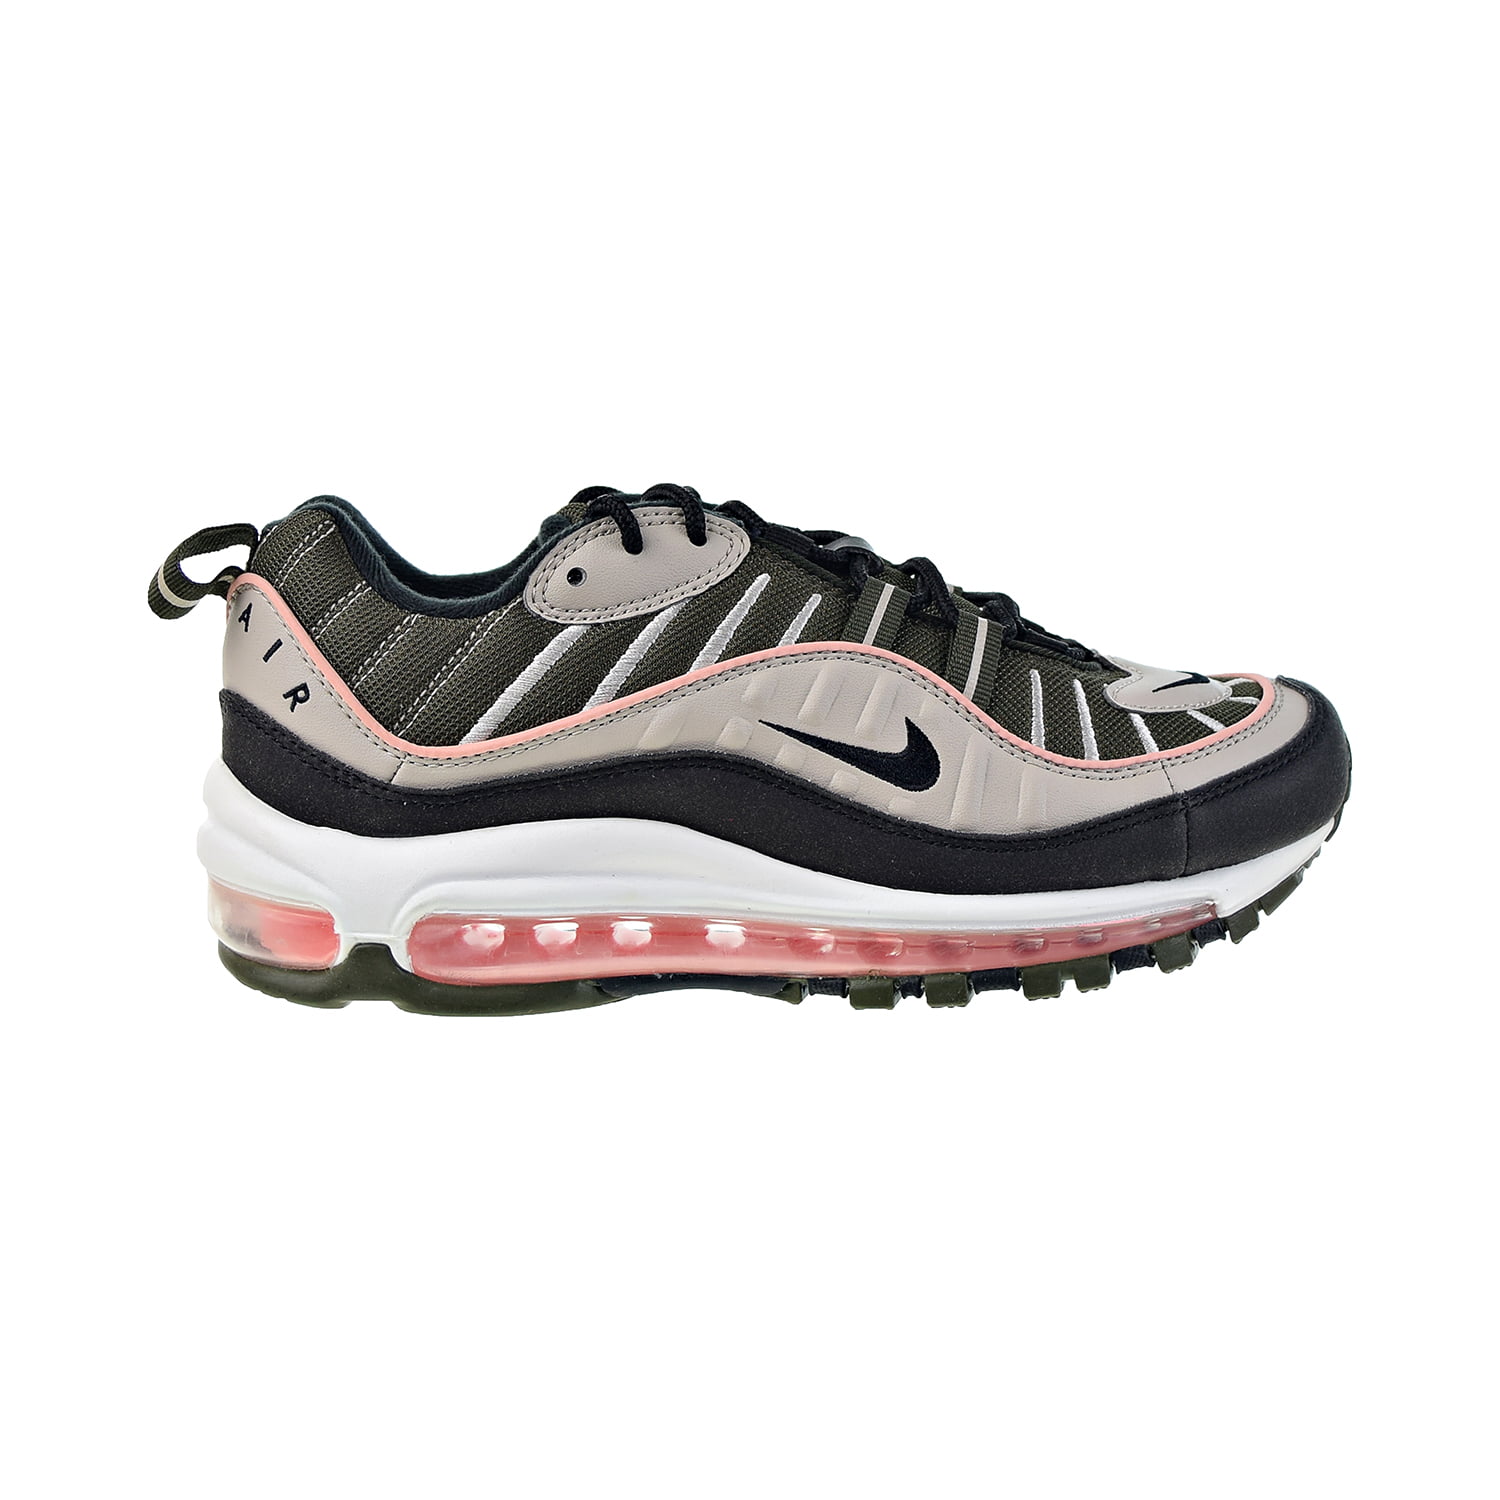 Personal Están deprimidos vulgar Nike Air Max 98 Women's Shoes Cargo Khaki-Black-Desert Sand ah6799-301 -  Walmart.com